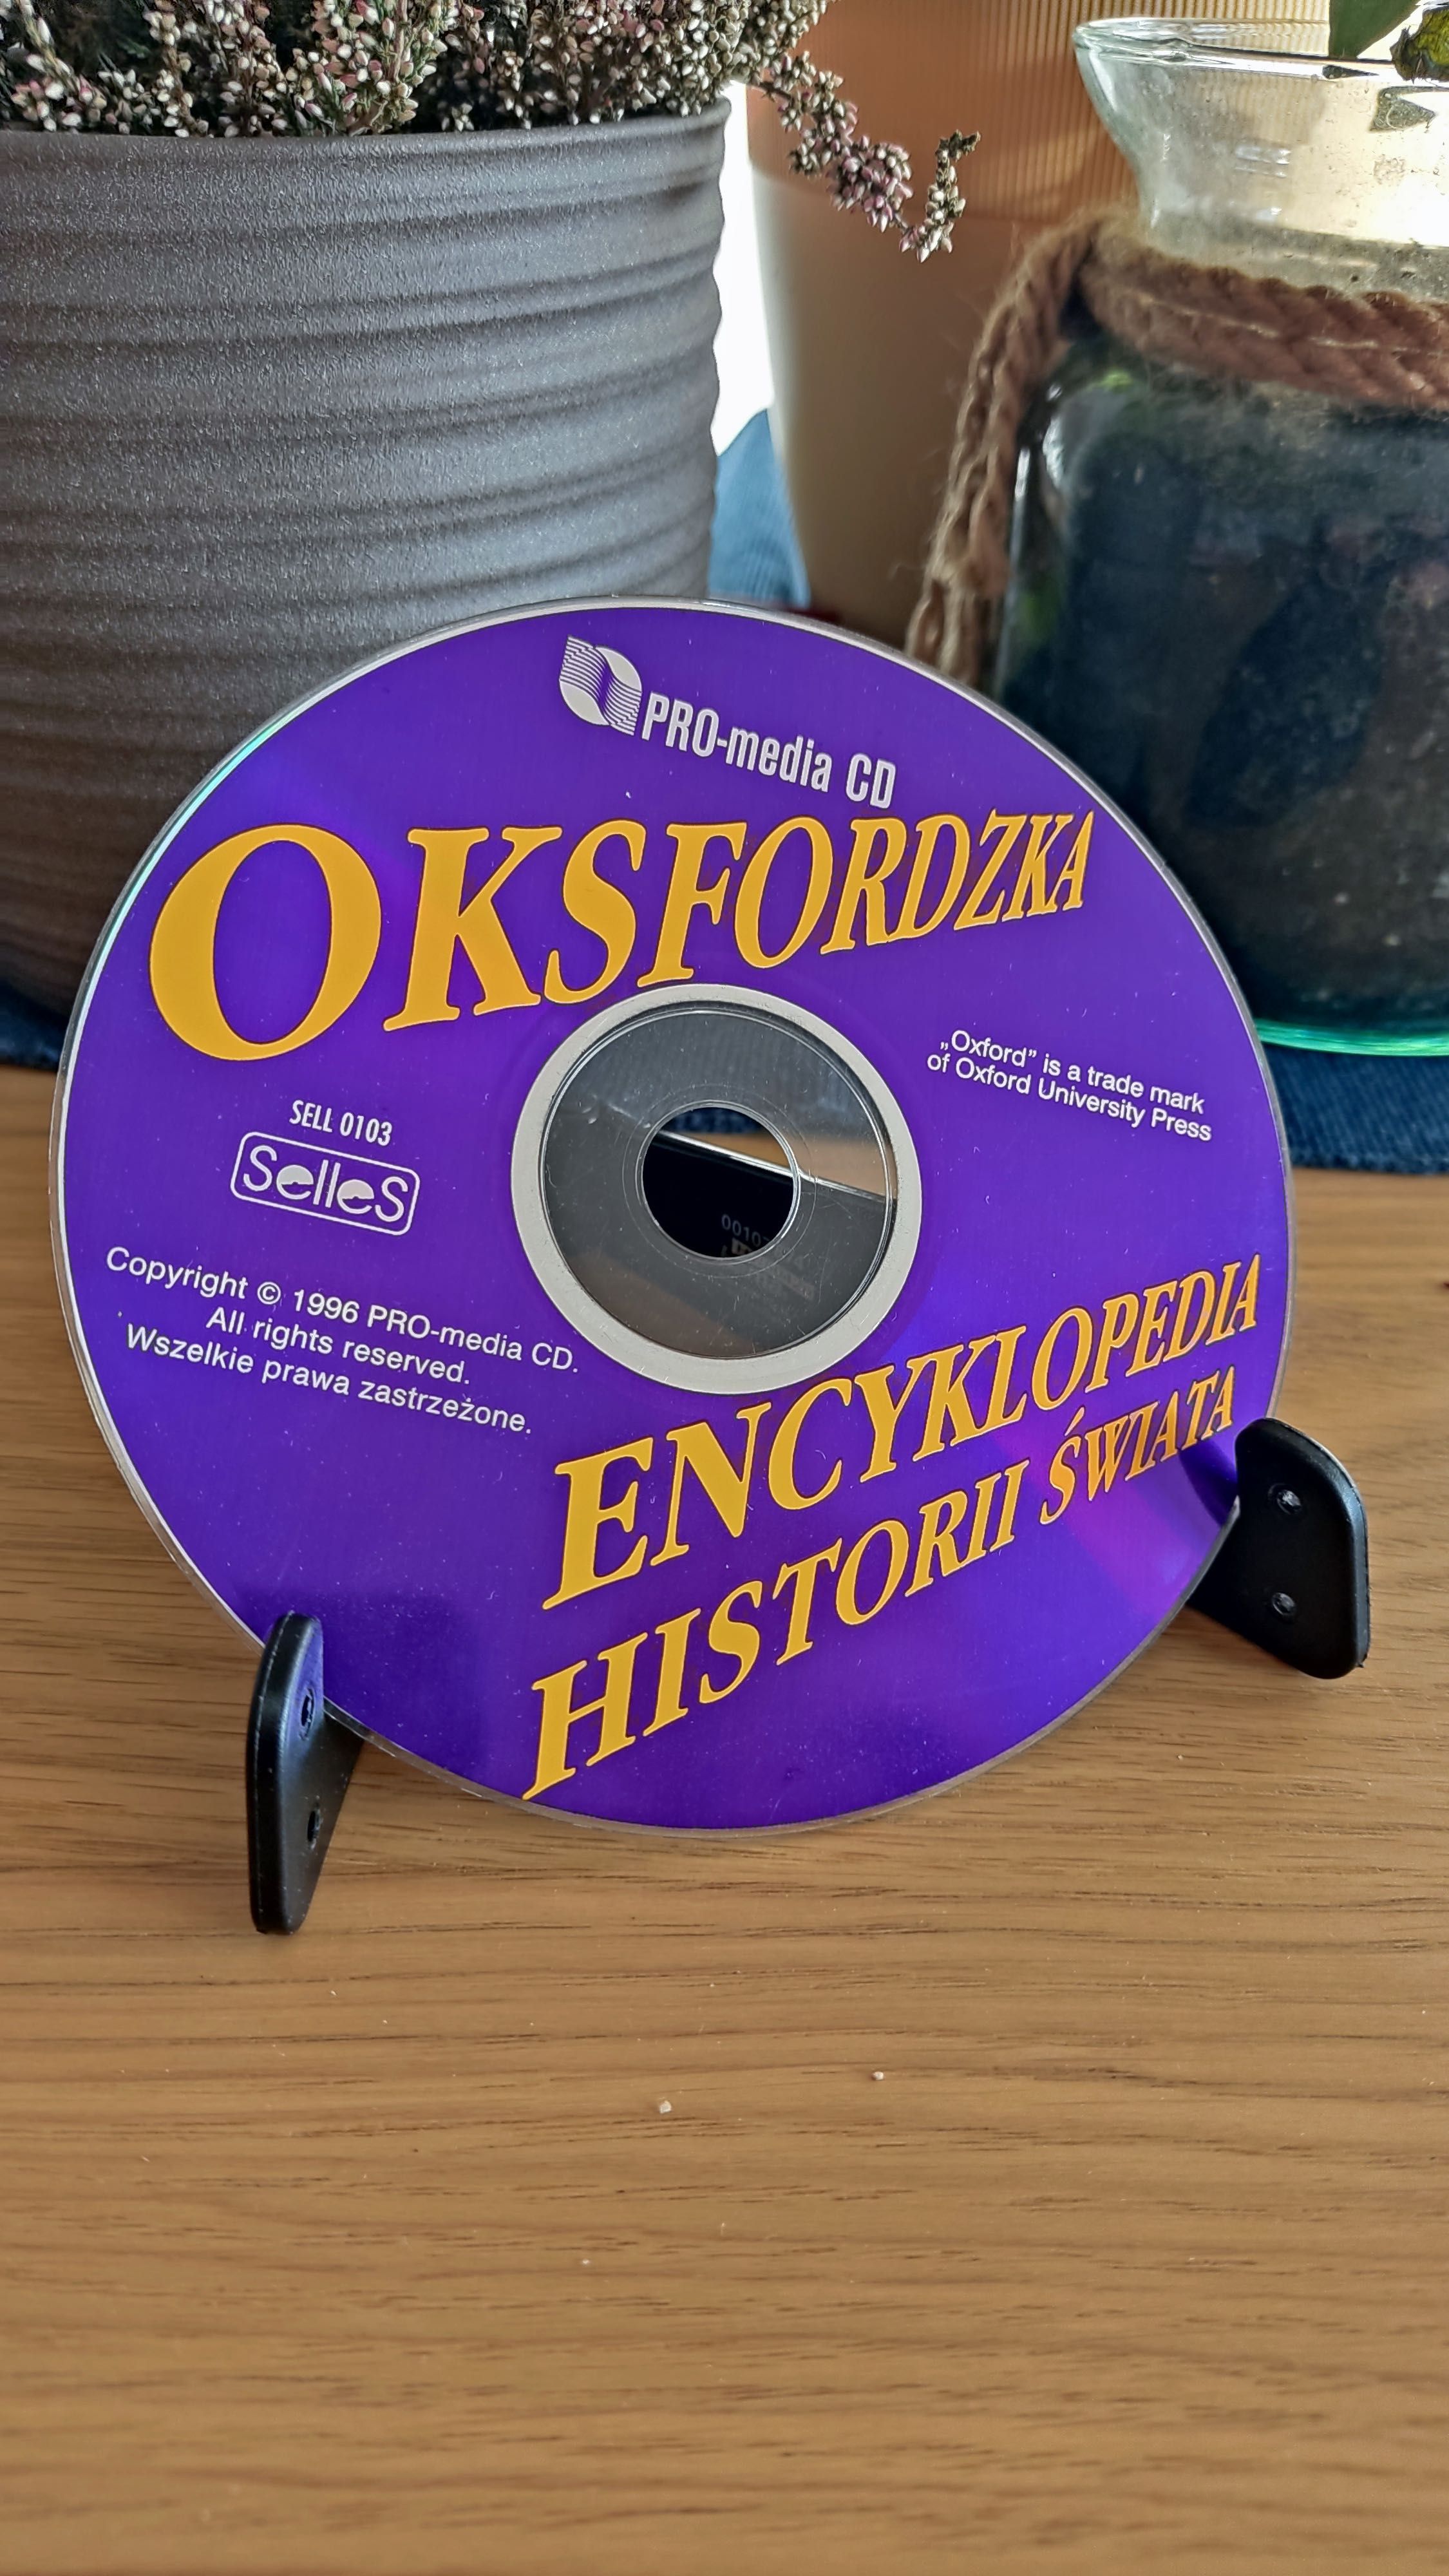 Oksfordzka Encyklopedia Historii Świata PC